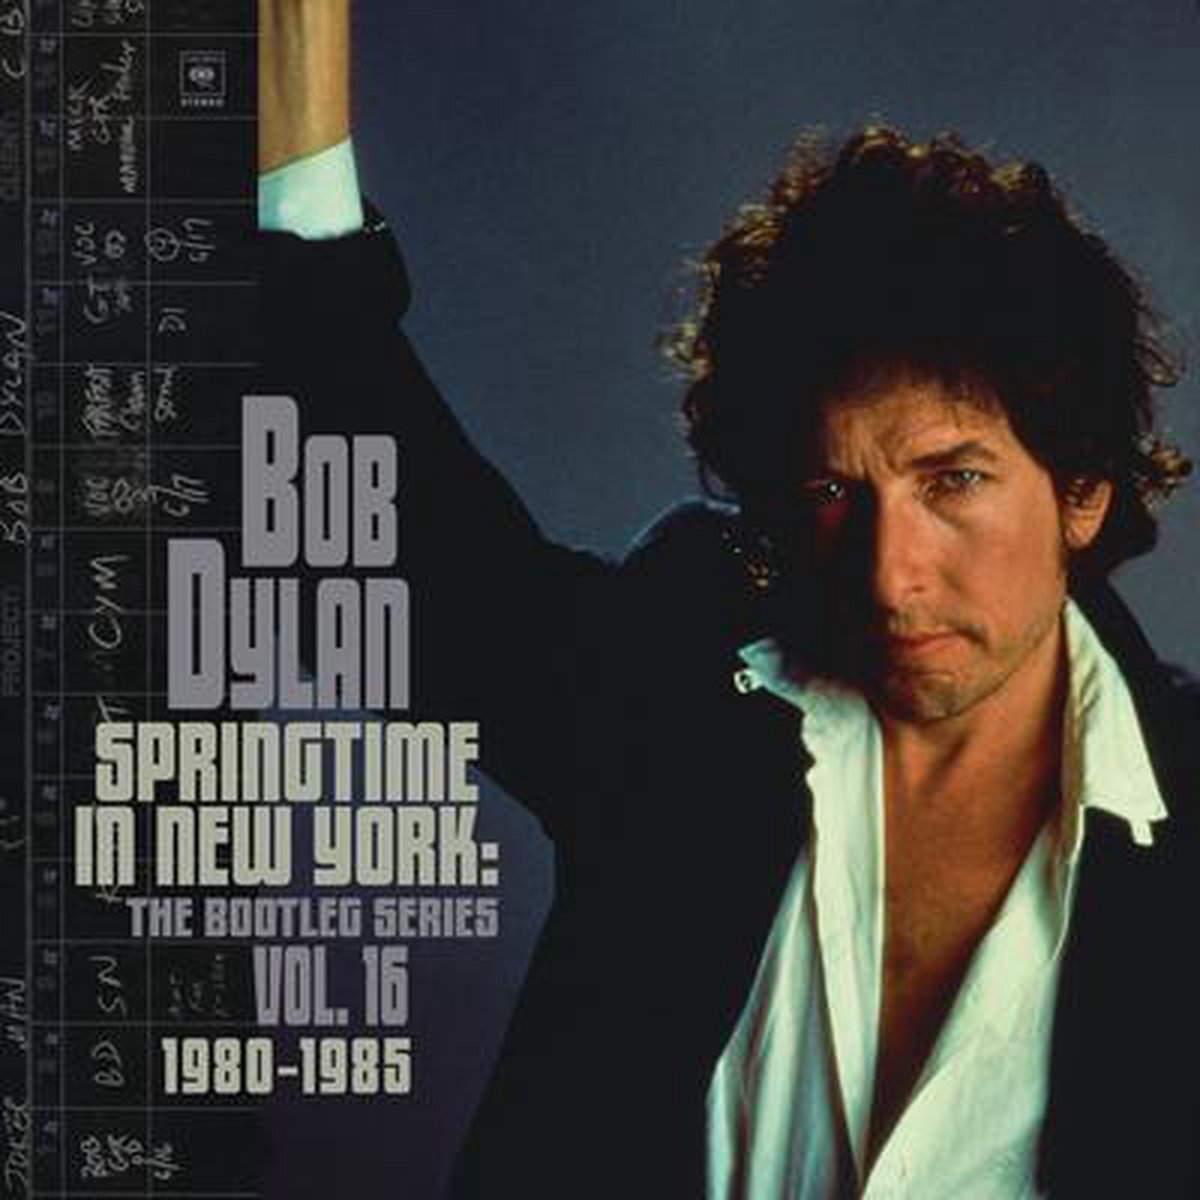 SONY BMG bob dylan - springtime in new york: the bootleg series vinyl